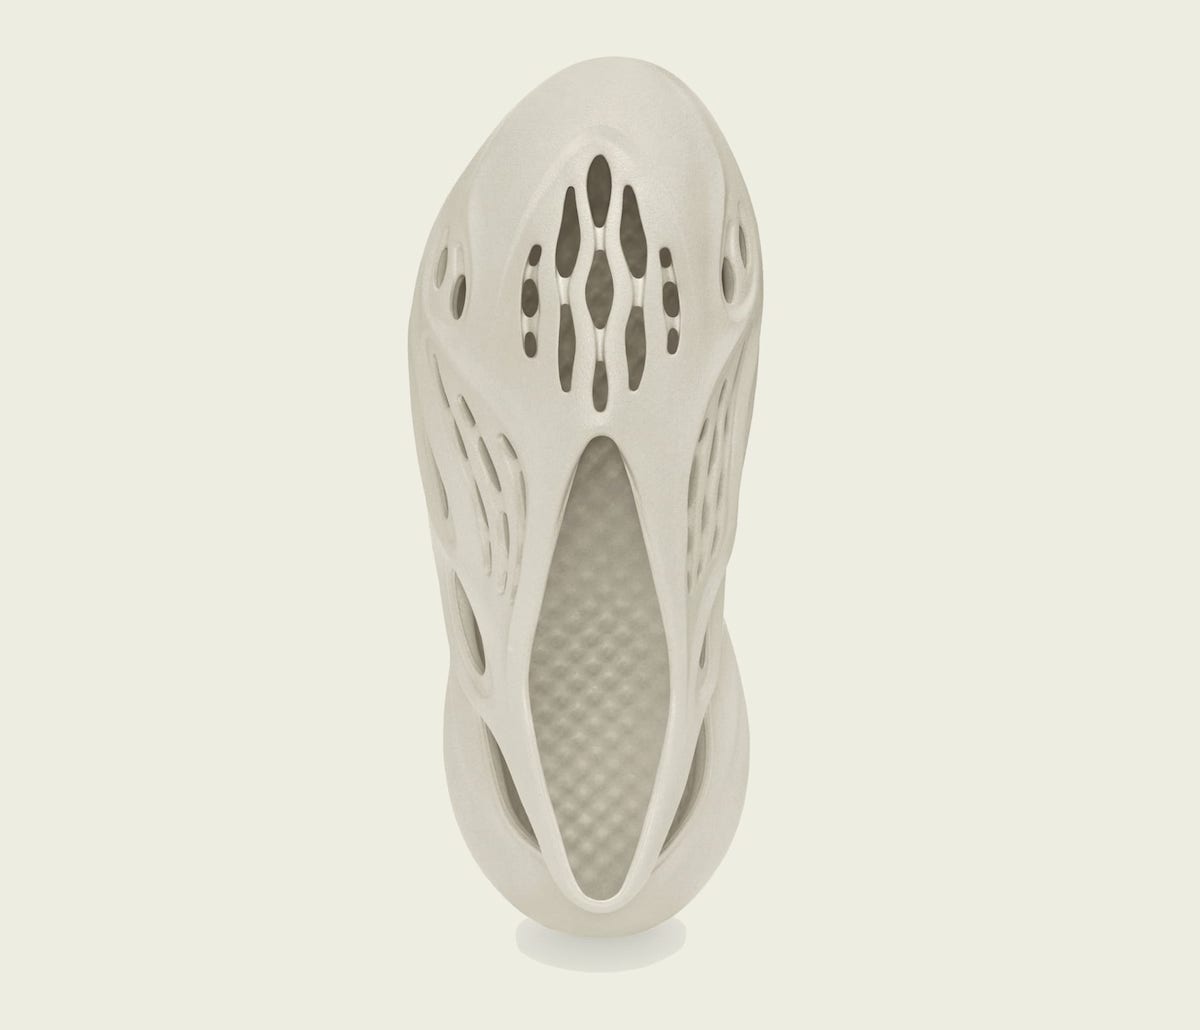 adidas-Yeezy-Foam-Runner-Sand-FY4567-Restock-Release-Date-2